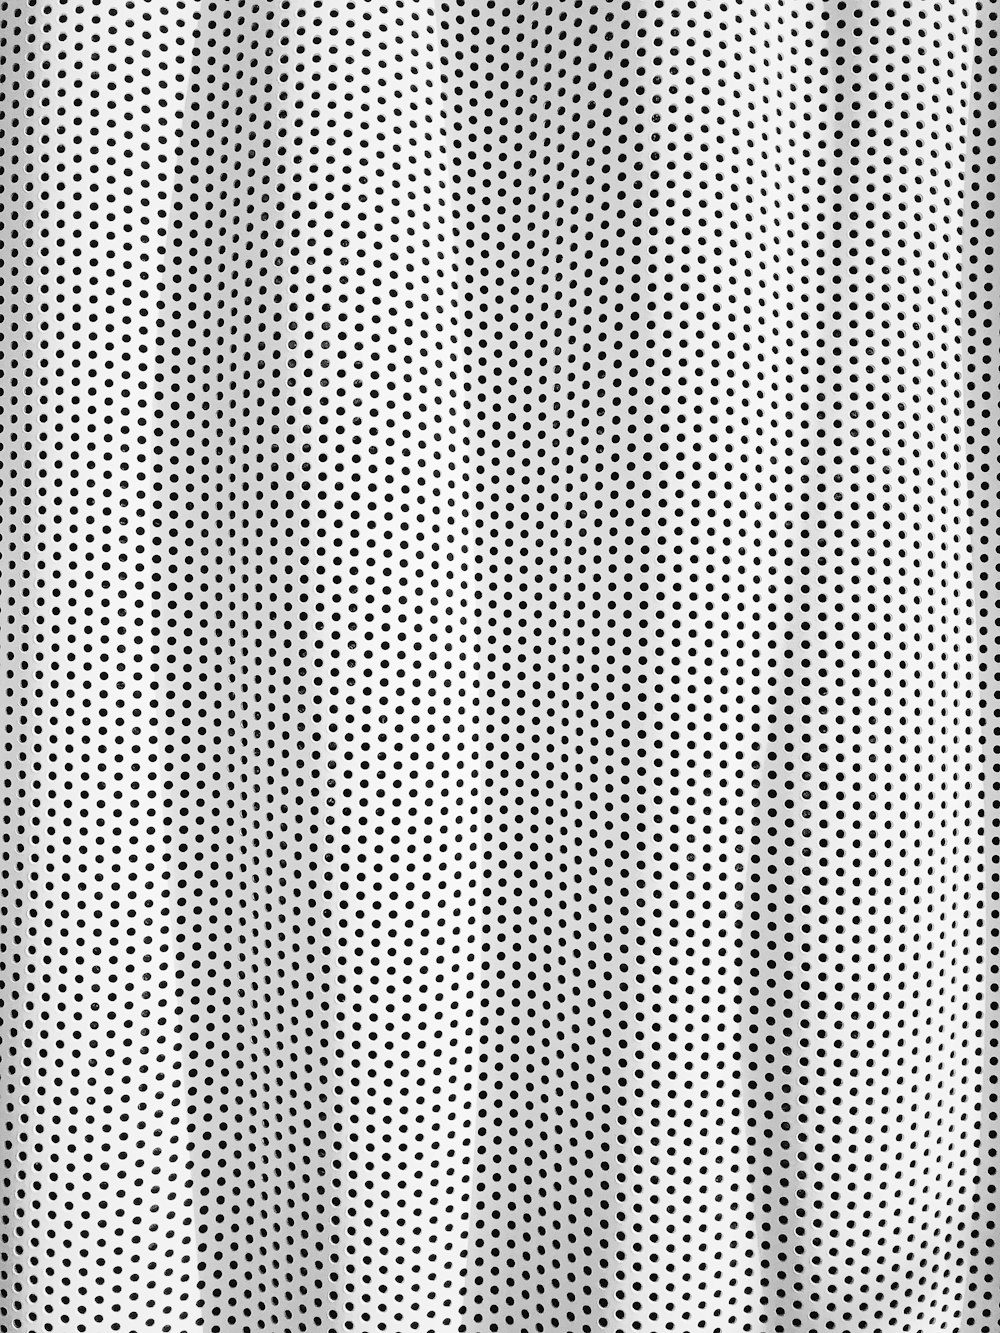 white and black polka dot textile